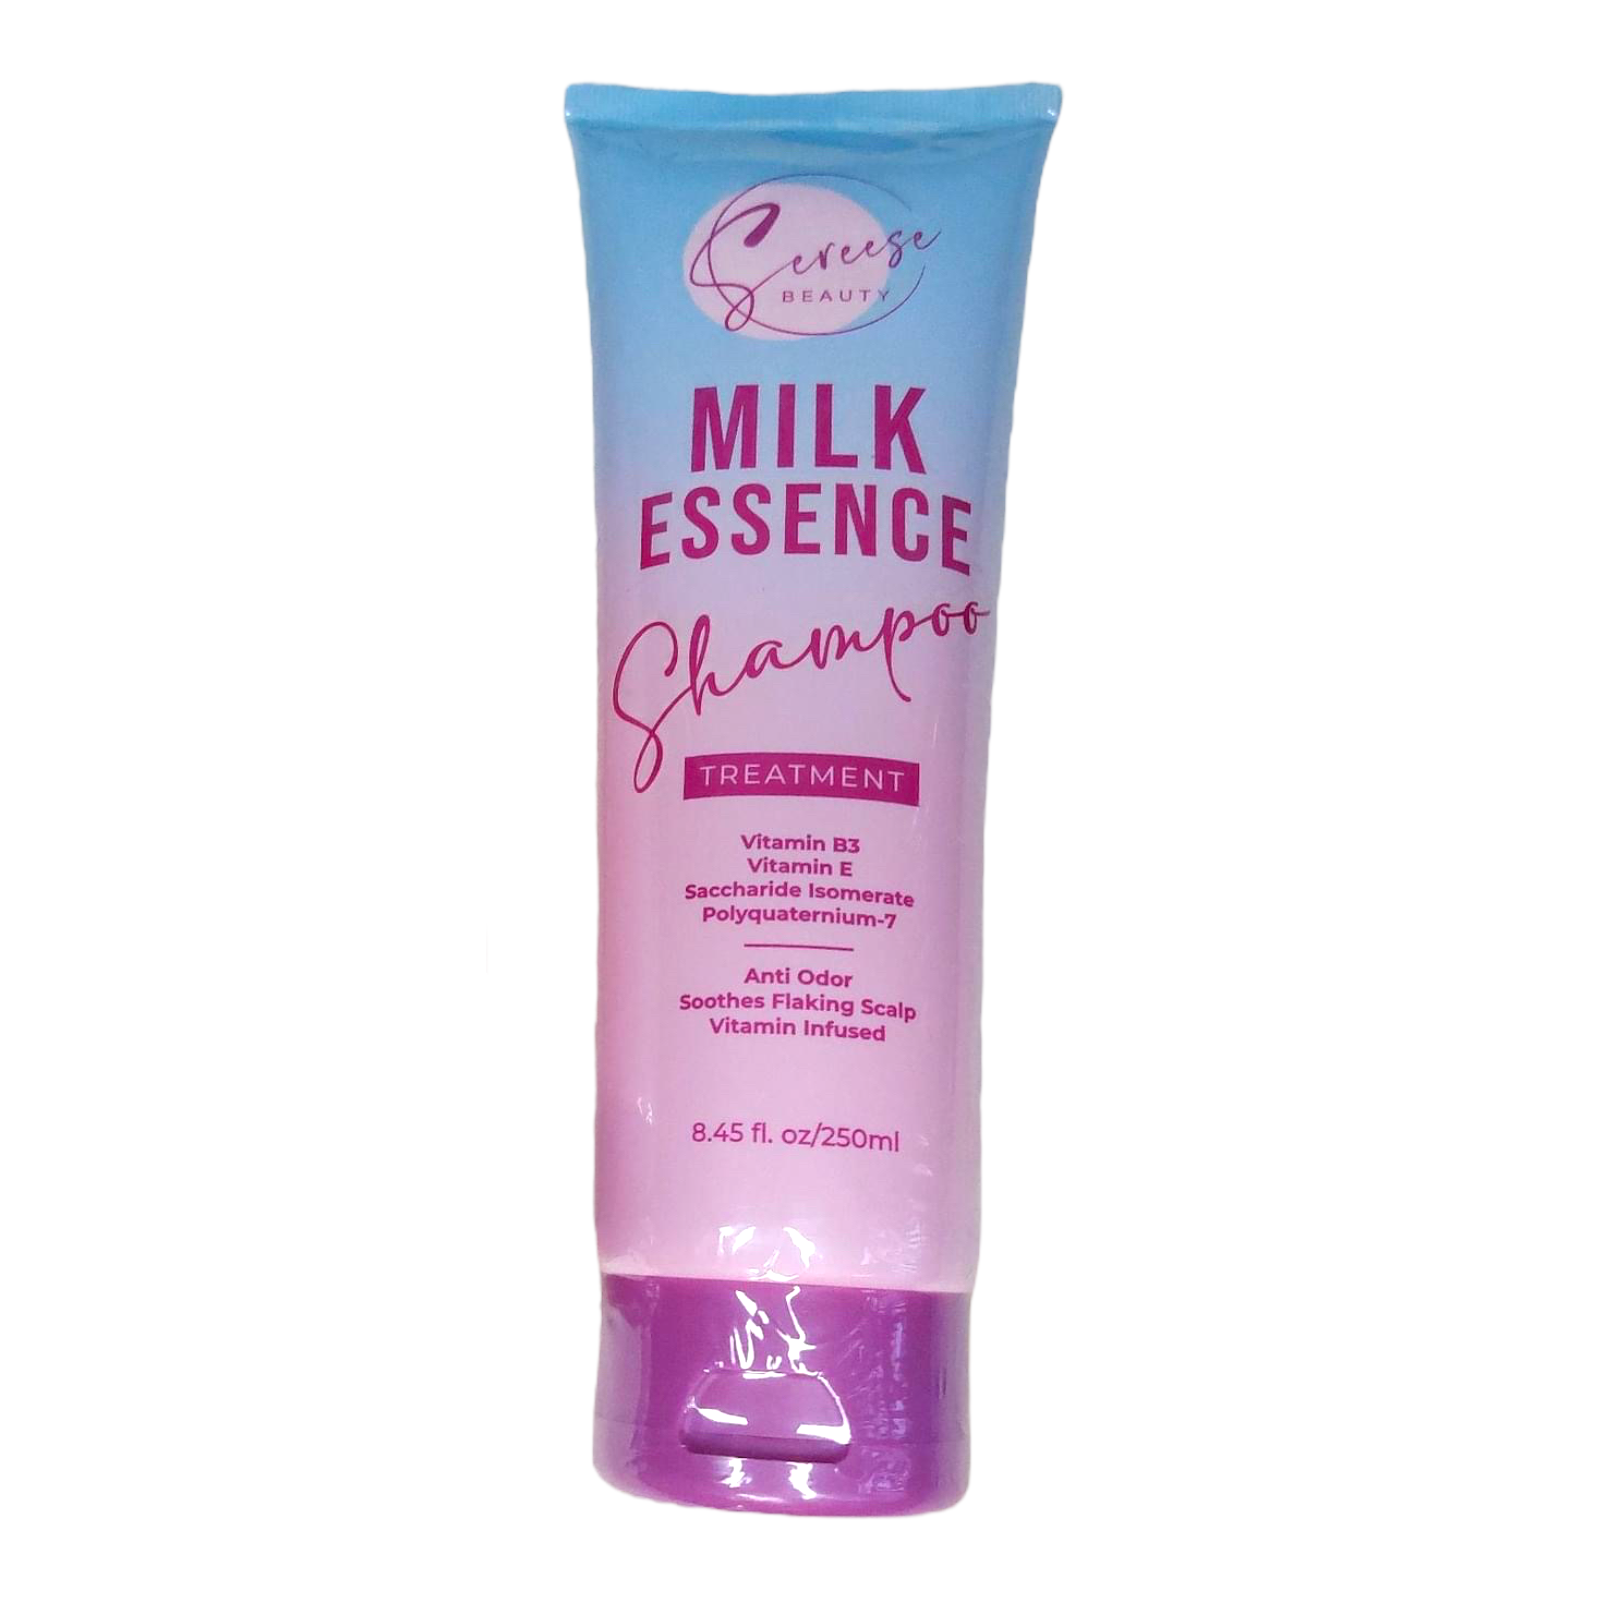 Sereese Beauty - Milk Essence SHAMPOO 250ml